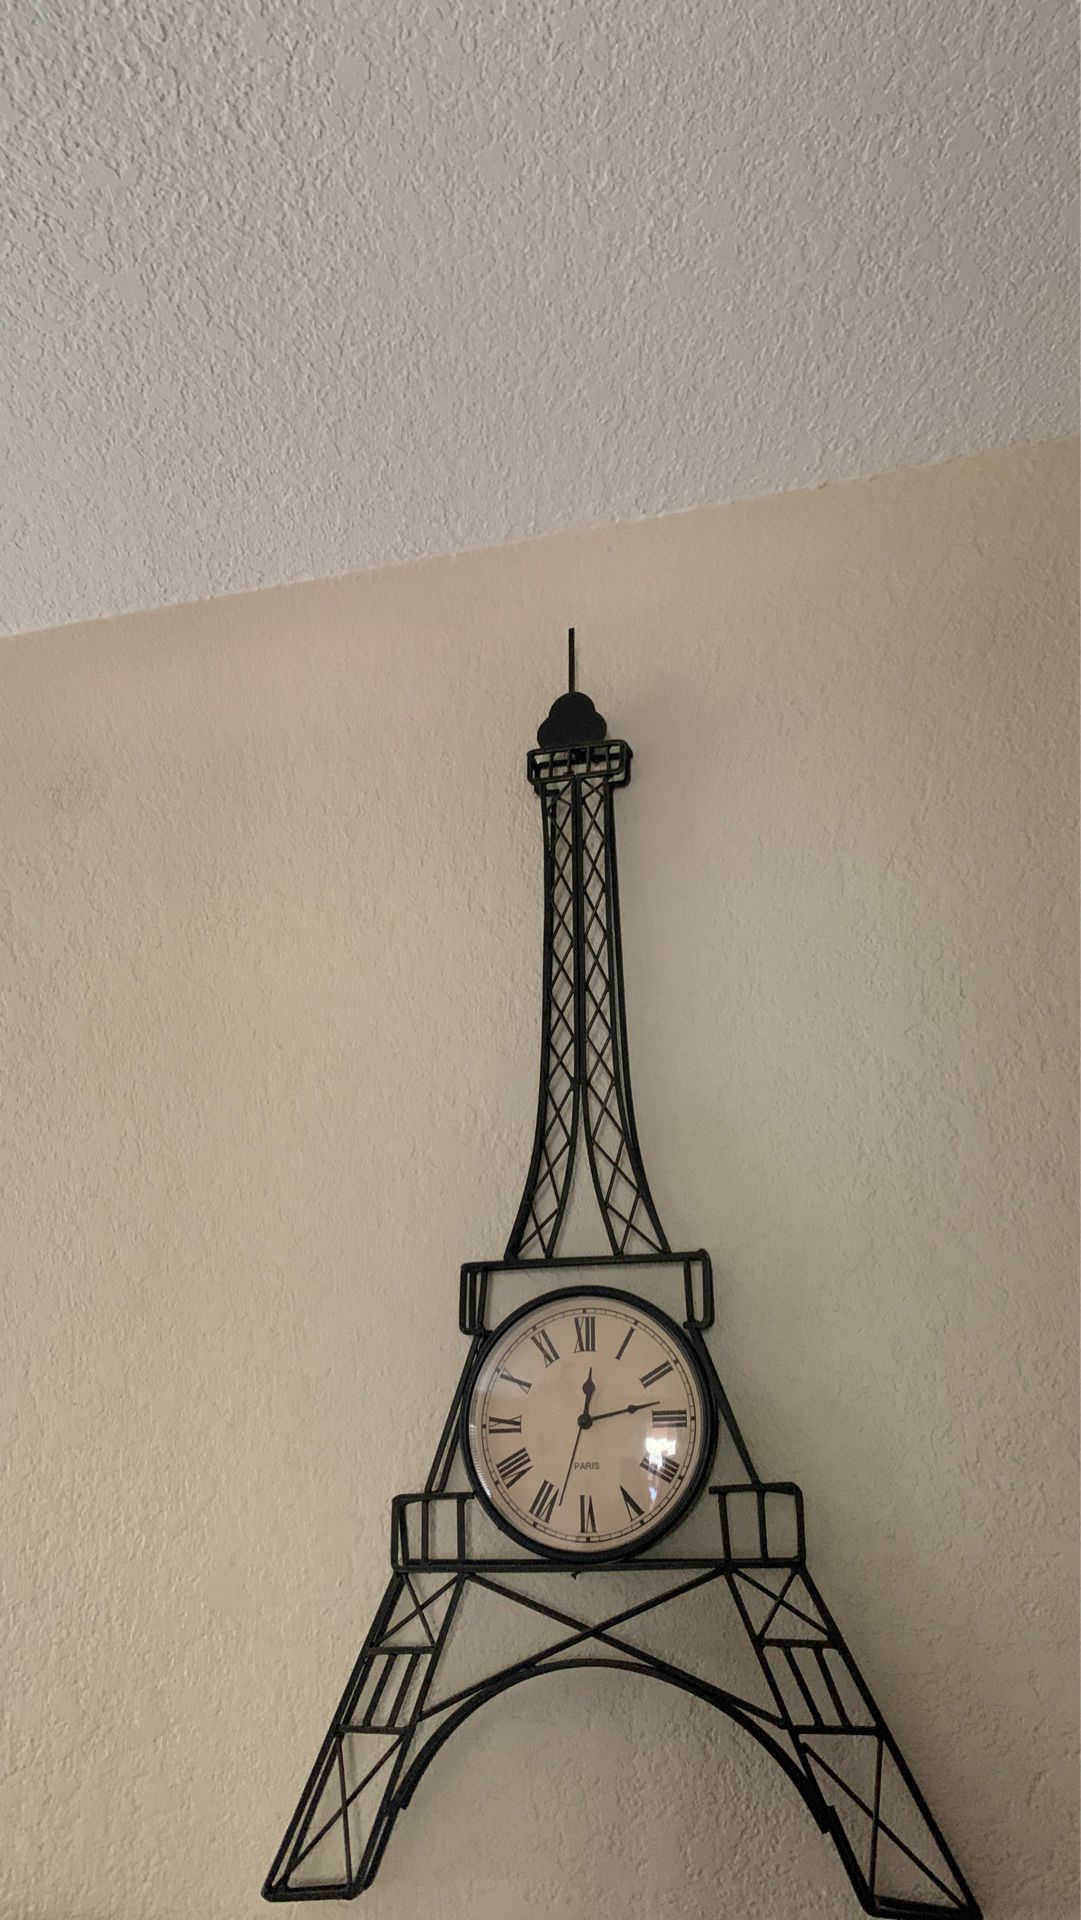 Paris wall watch